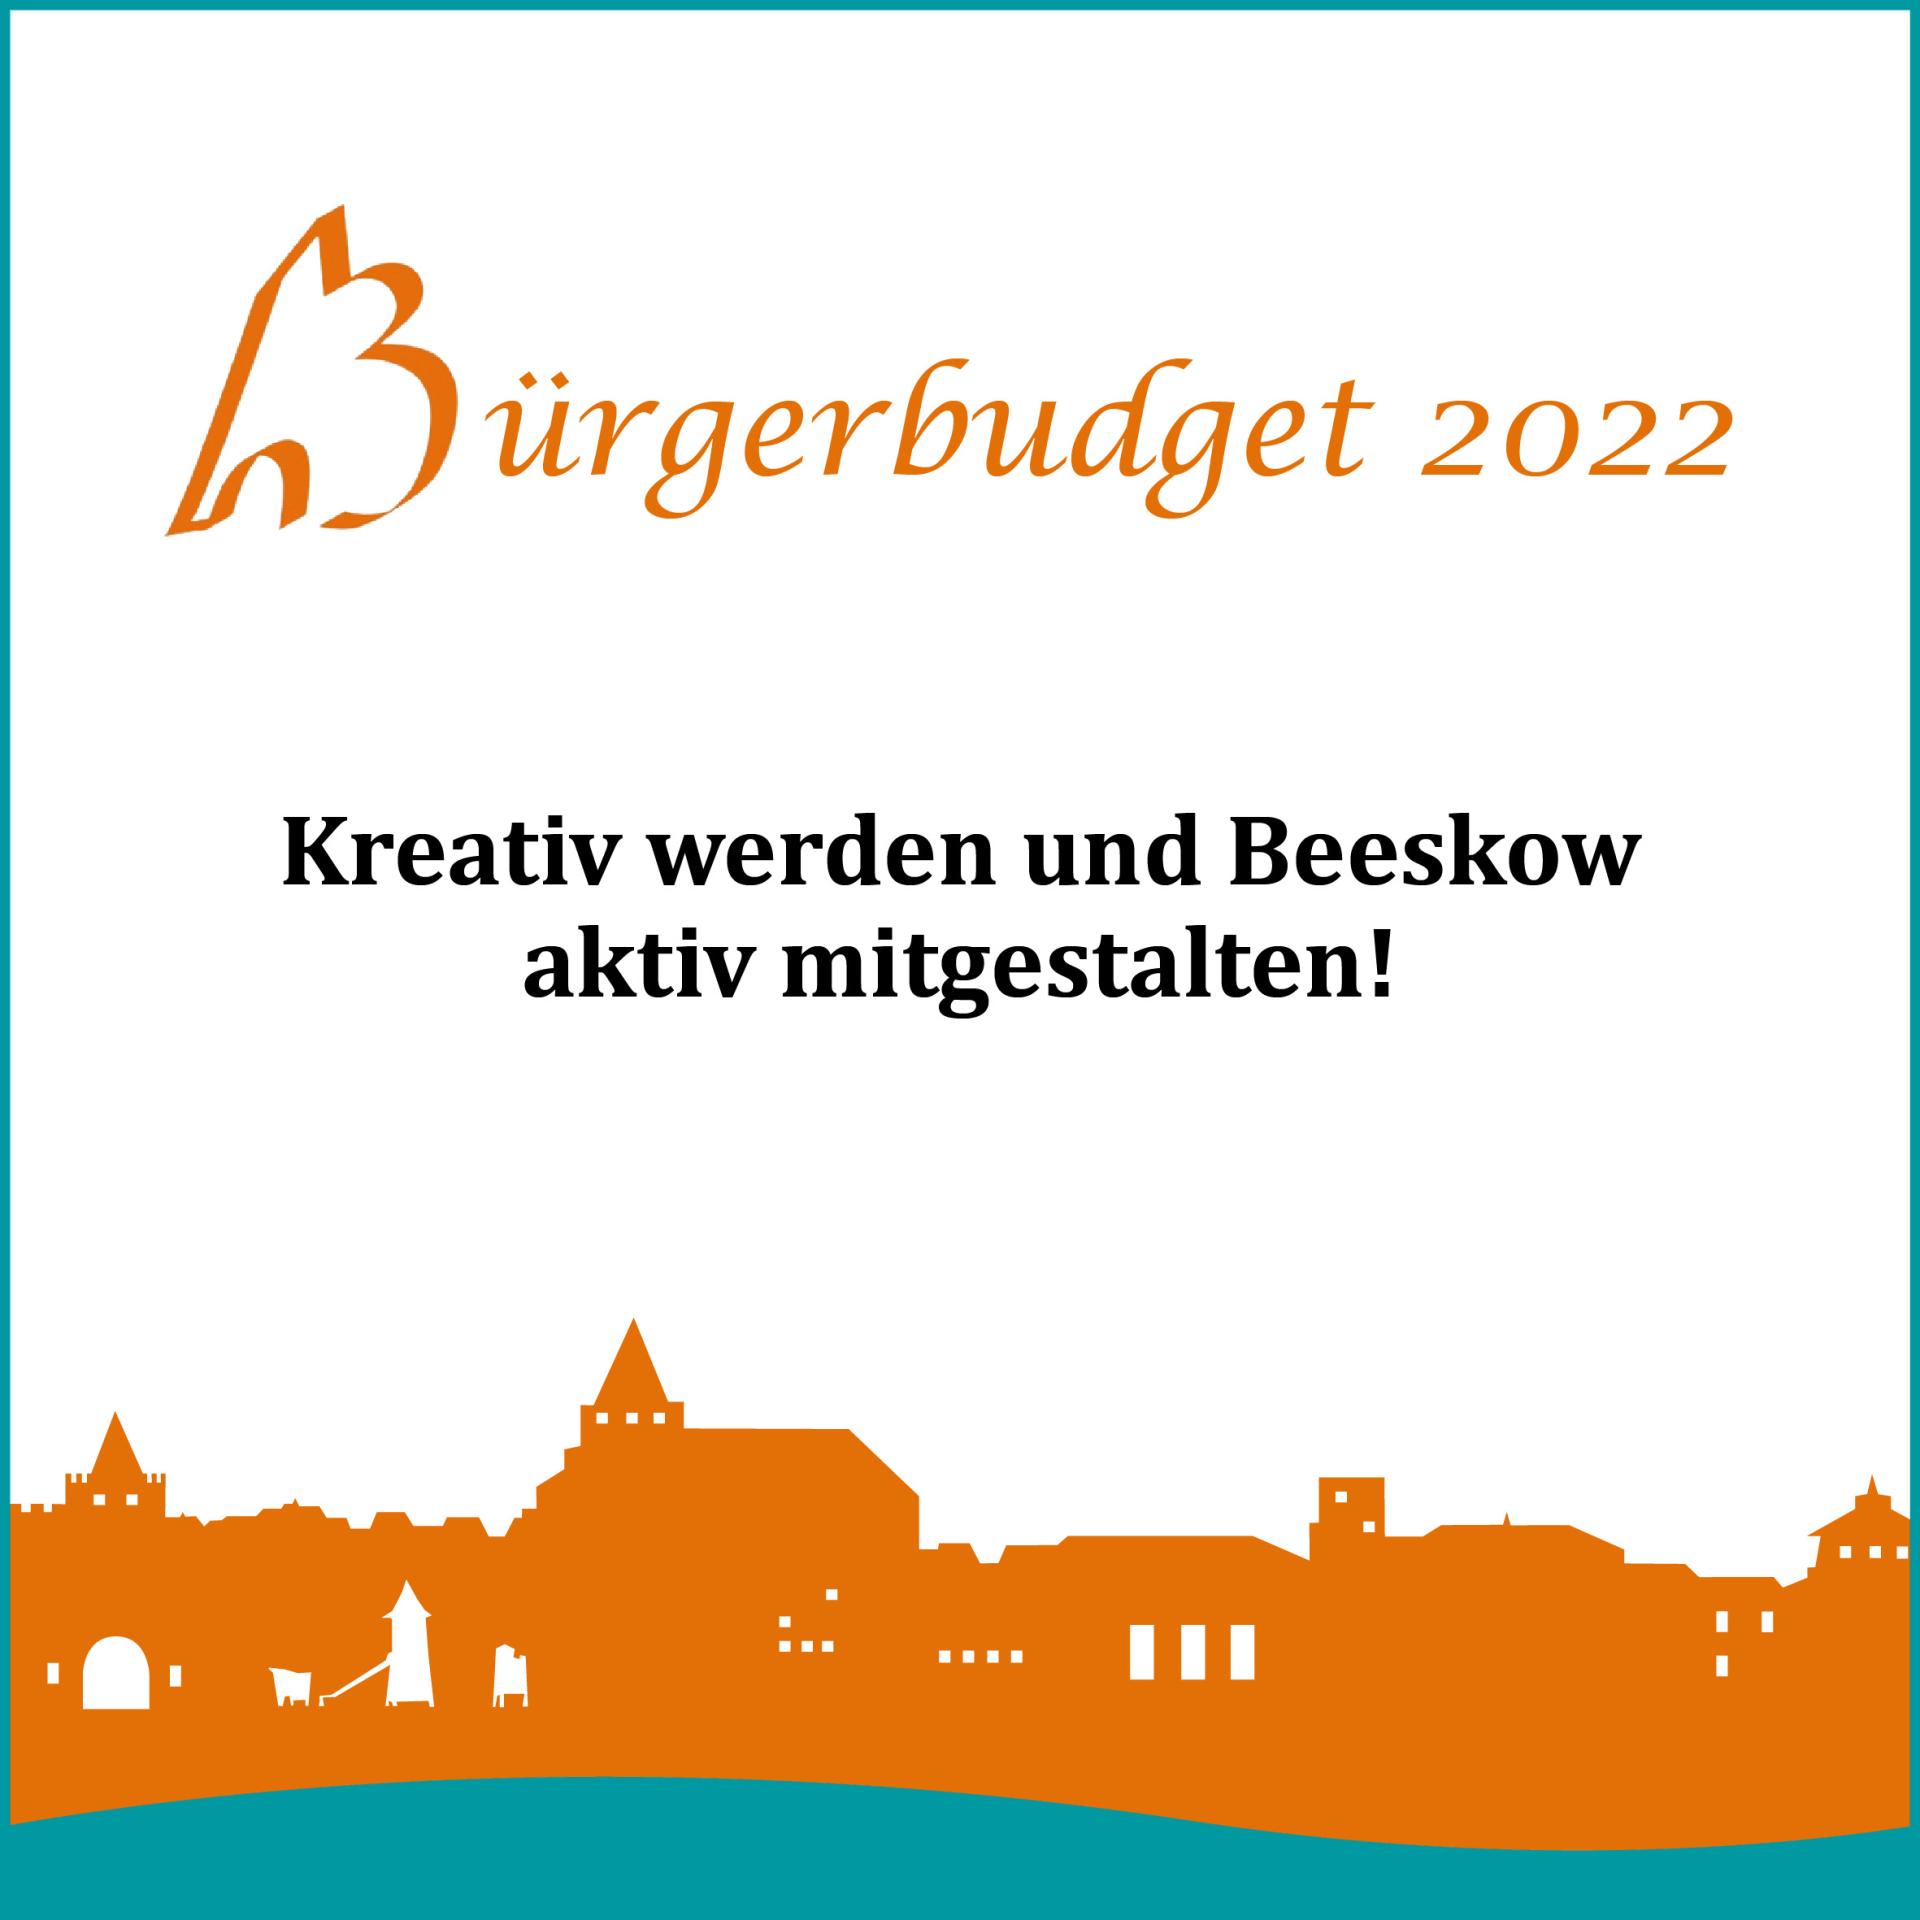 Bürgerbudget 2022